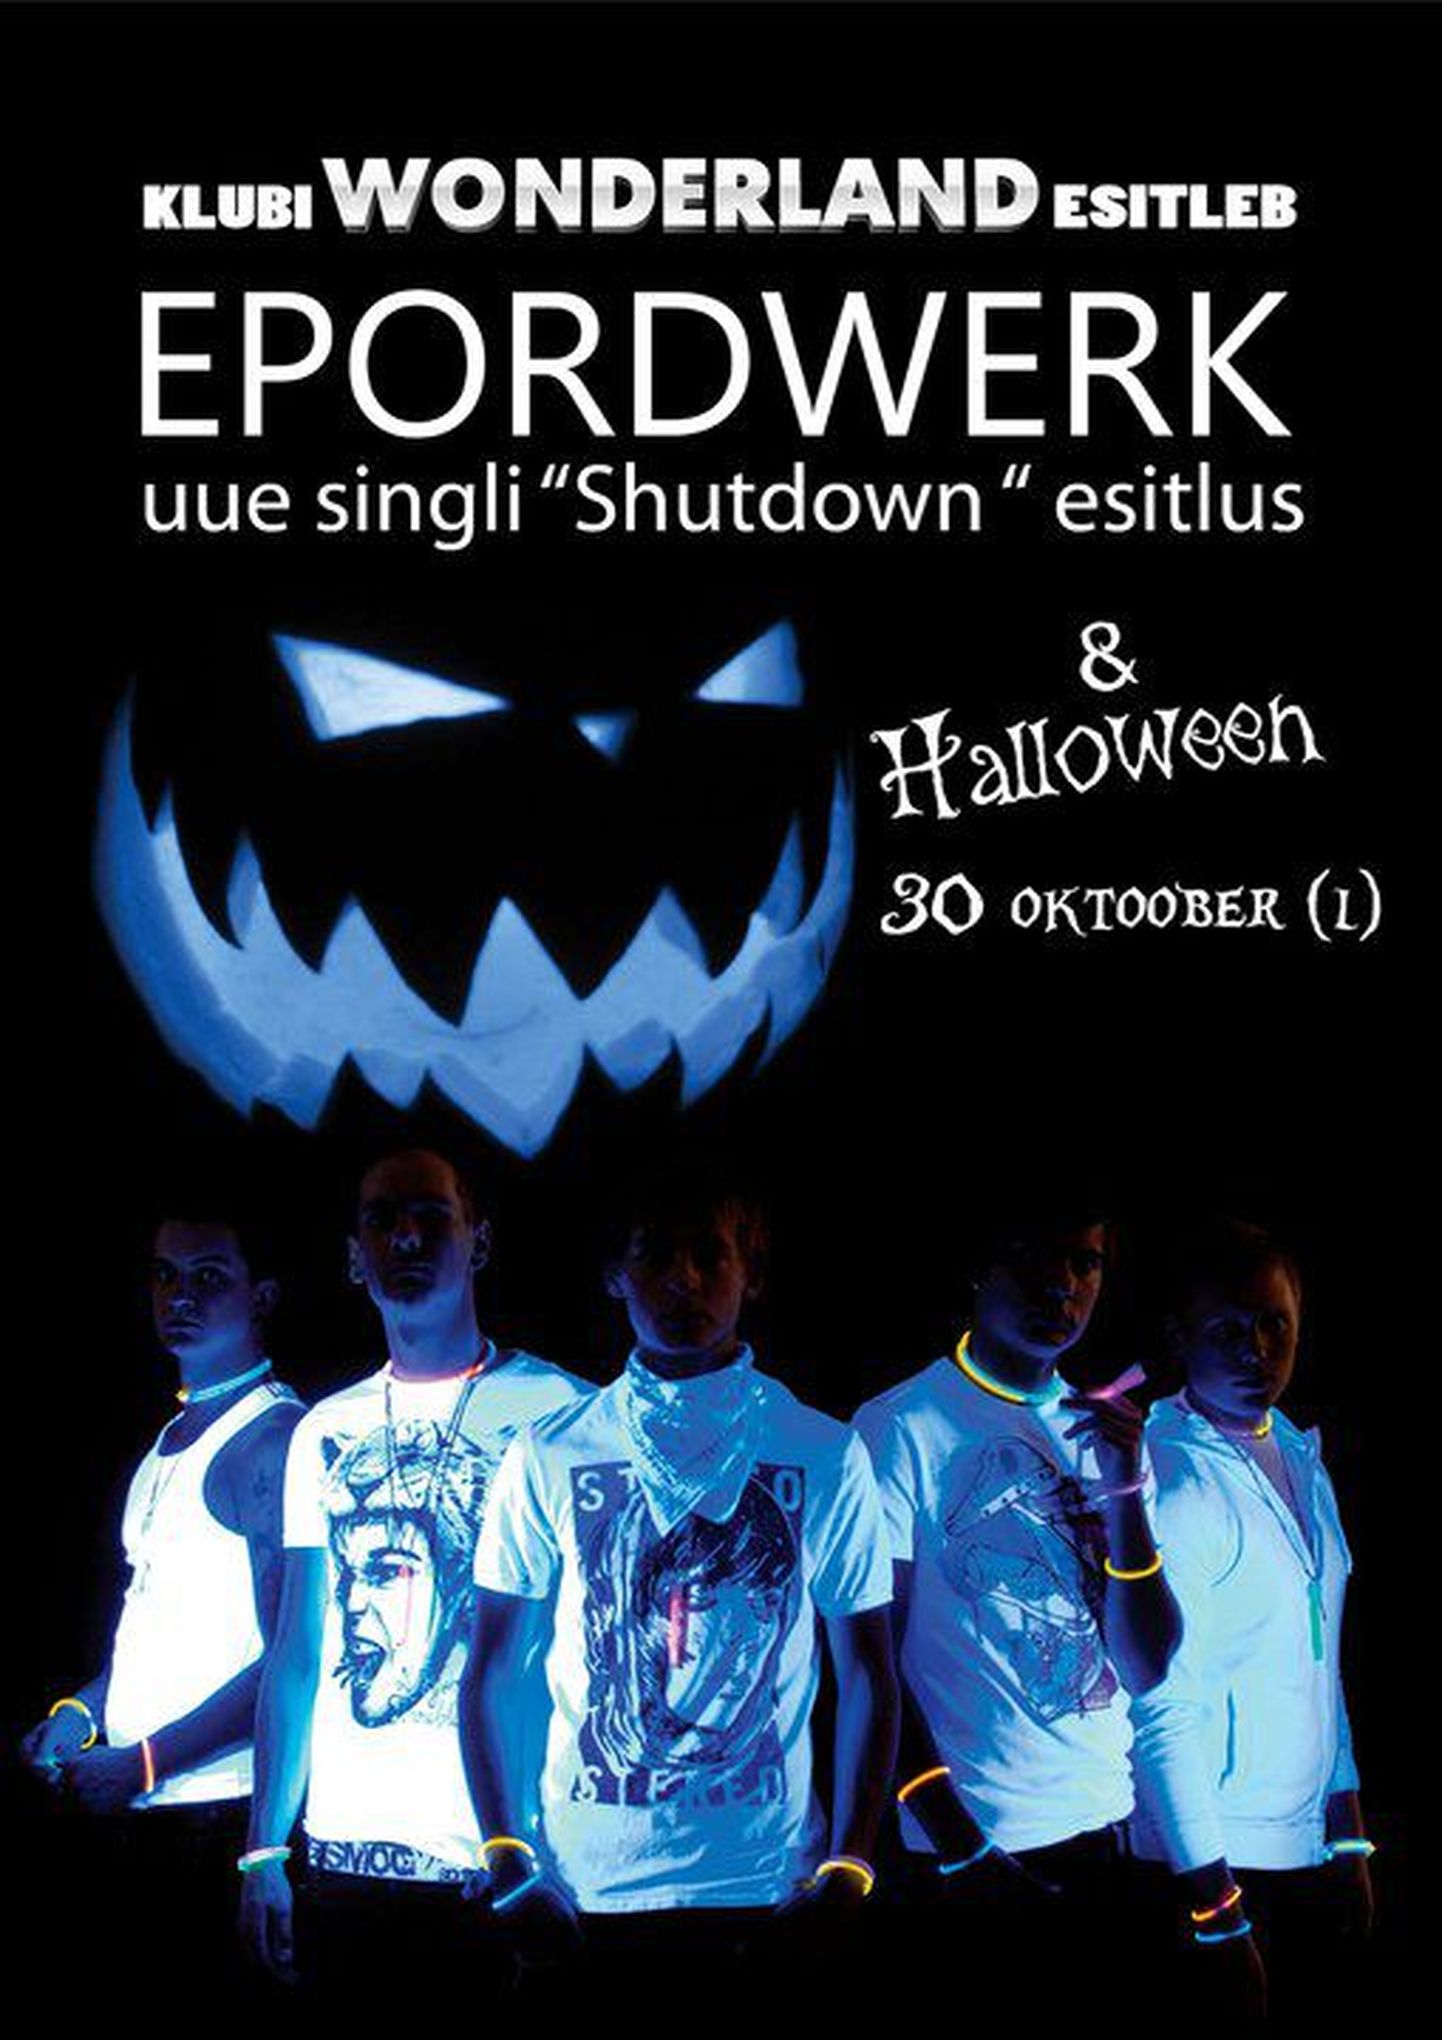 Ansambel Epordwerk esitleb uut singlit klubis Wonderland